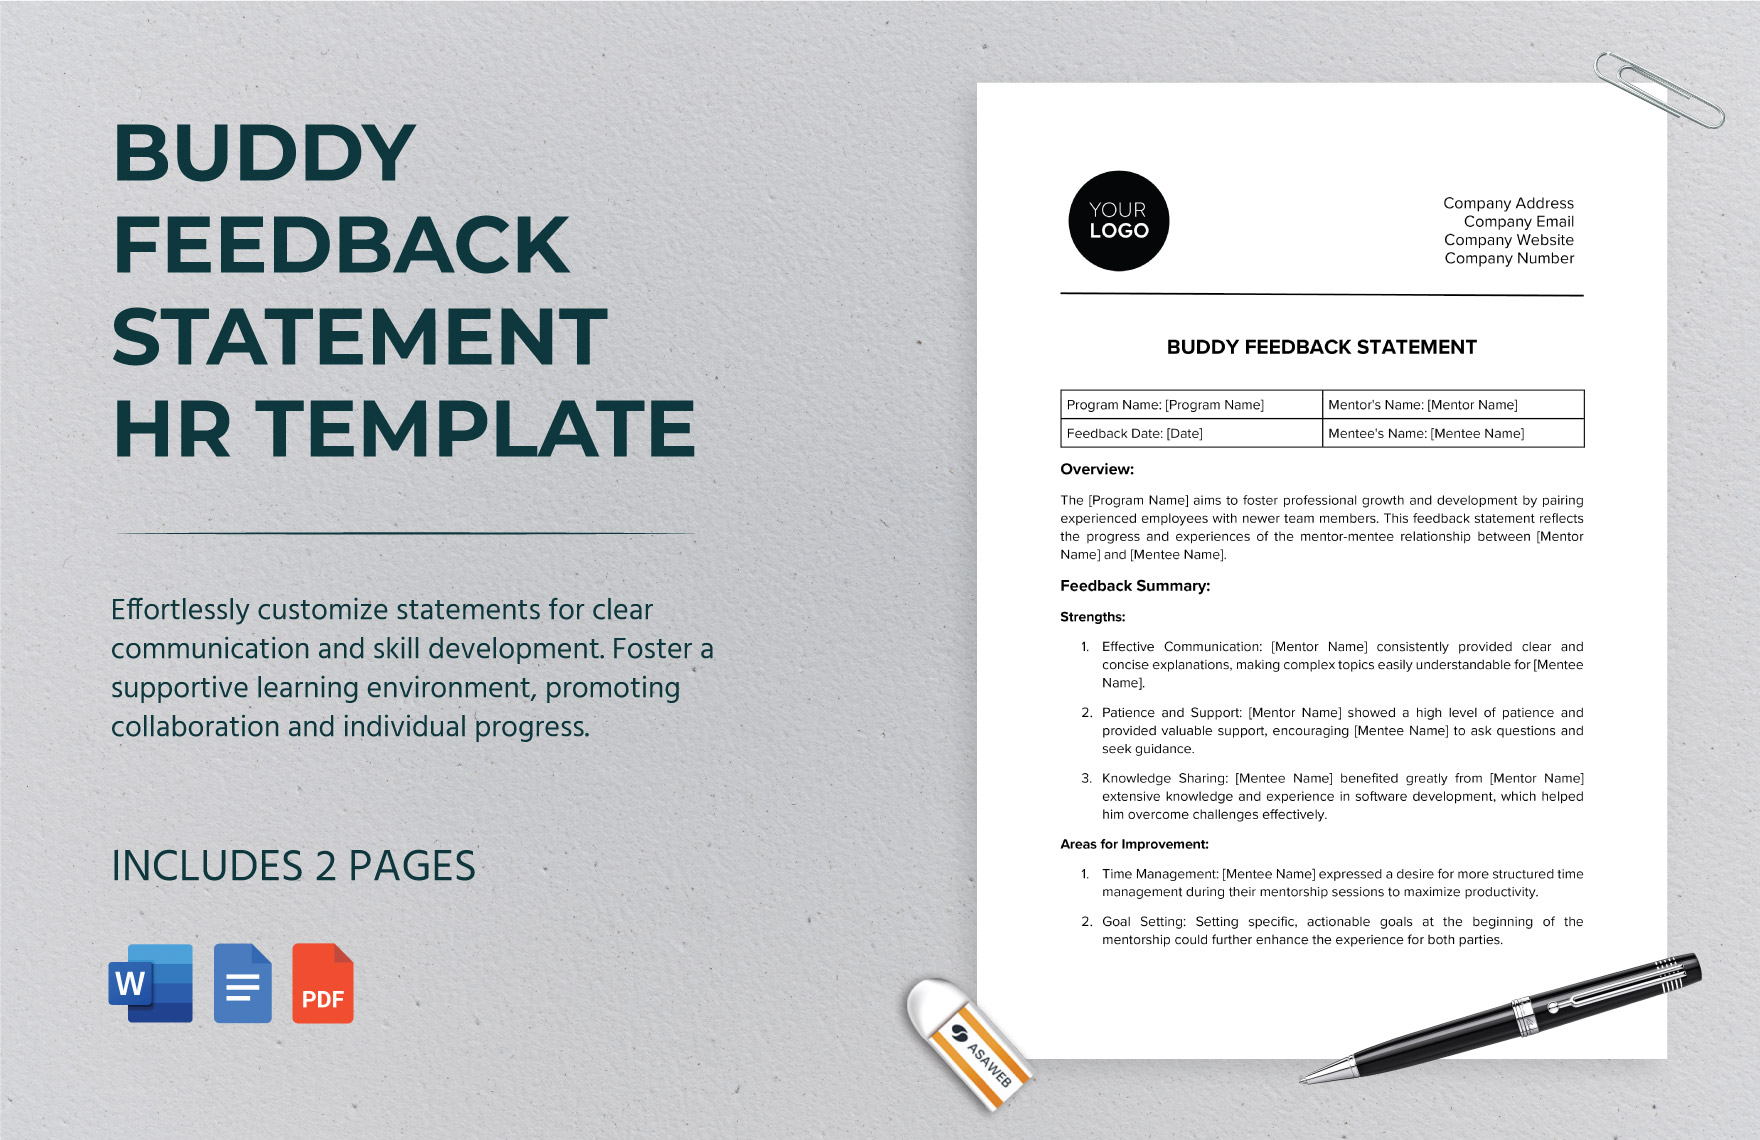 Buddy Feedback Statement HR Template  in Word, Google Docs, PDF